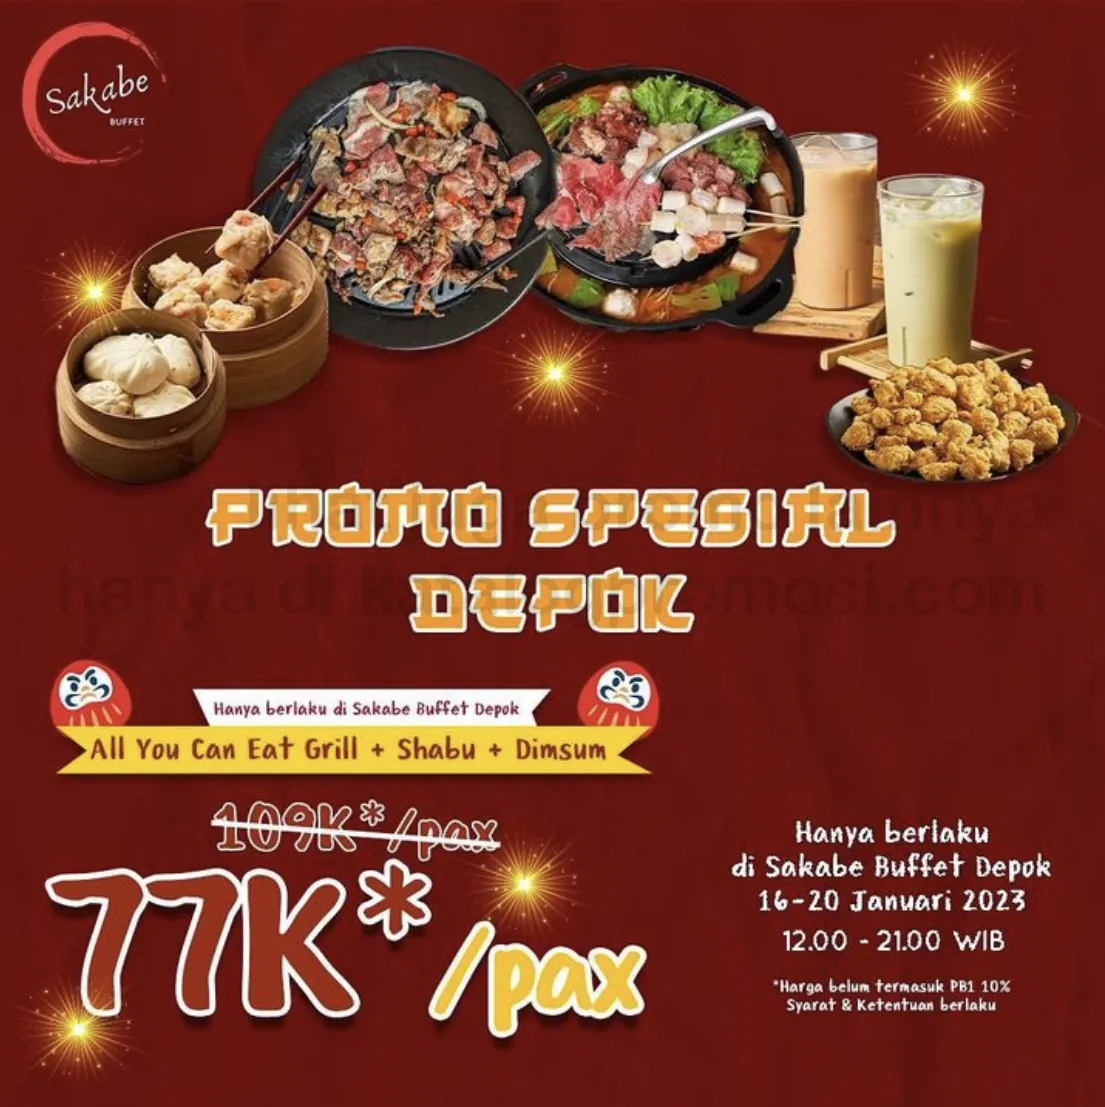 Promo Sakabe Buffet Depok Paket All You Can Eat Grill + Shabu + Dimsum cuma Rp. 77.000/pax